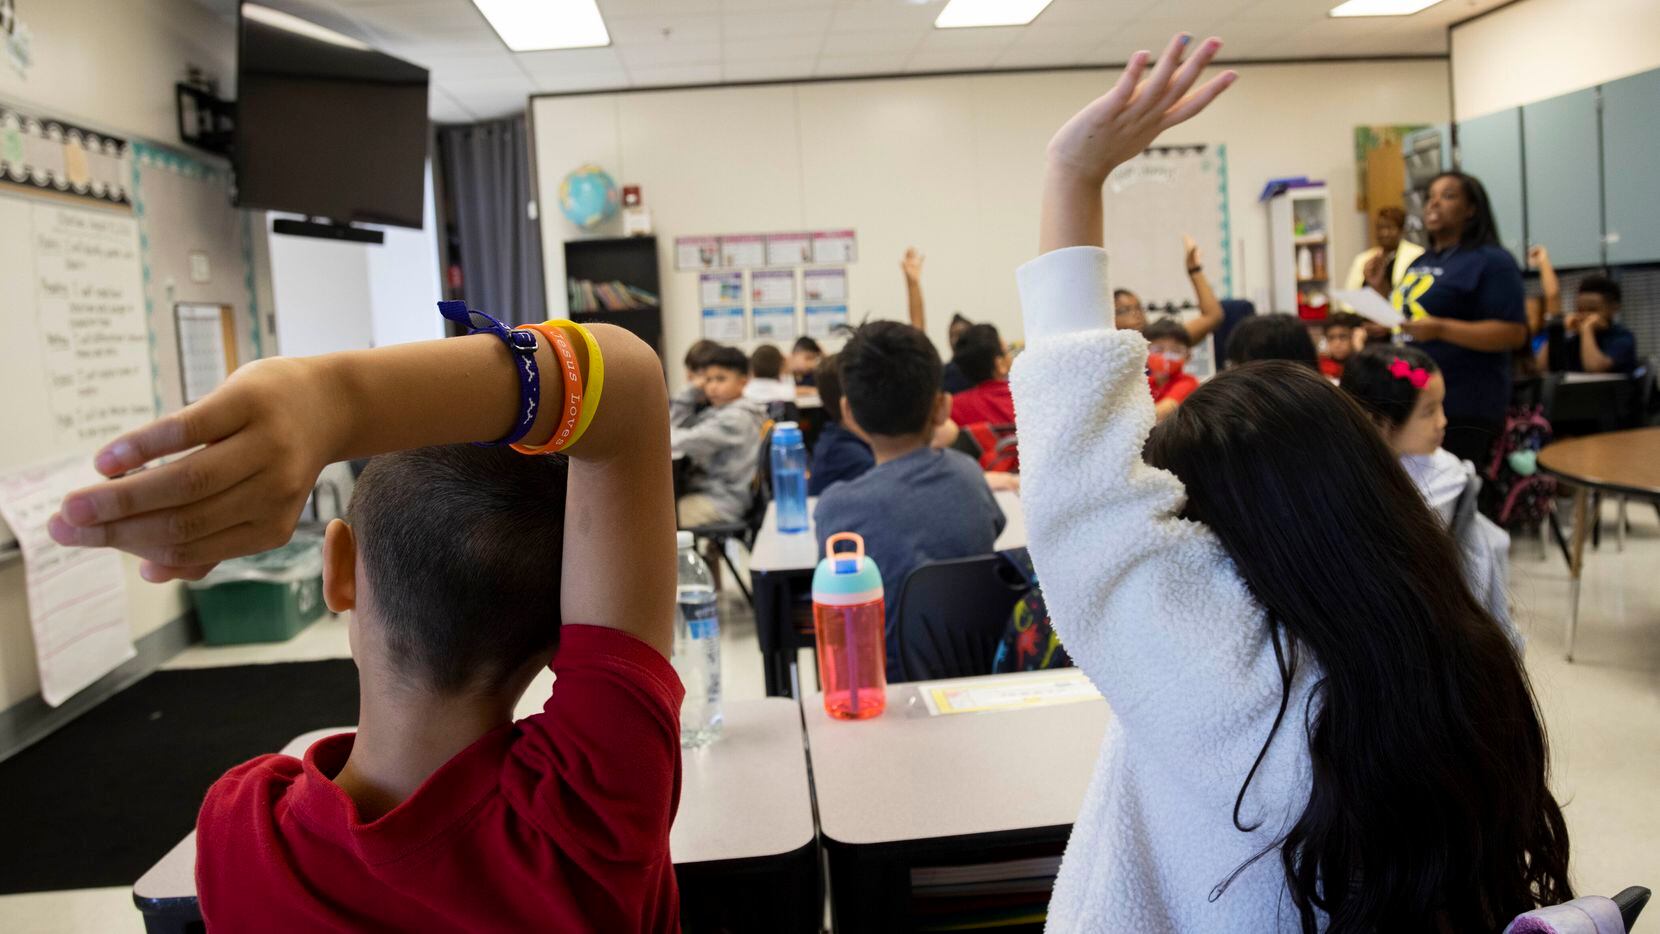 Students raise their hands as third grade teacher Anjelica Turner teaches about character...